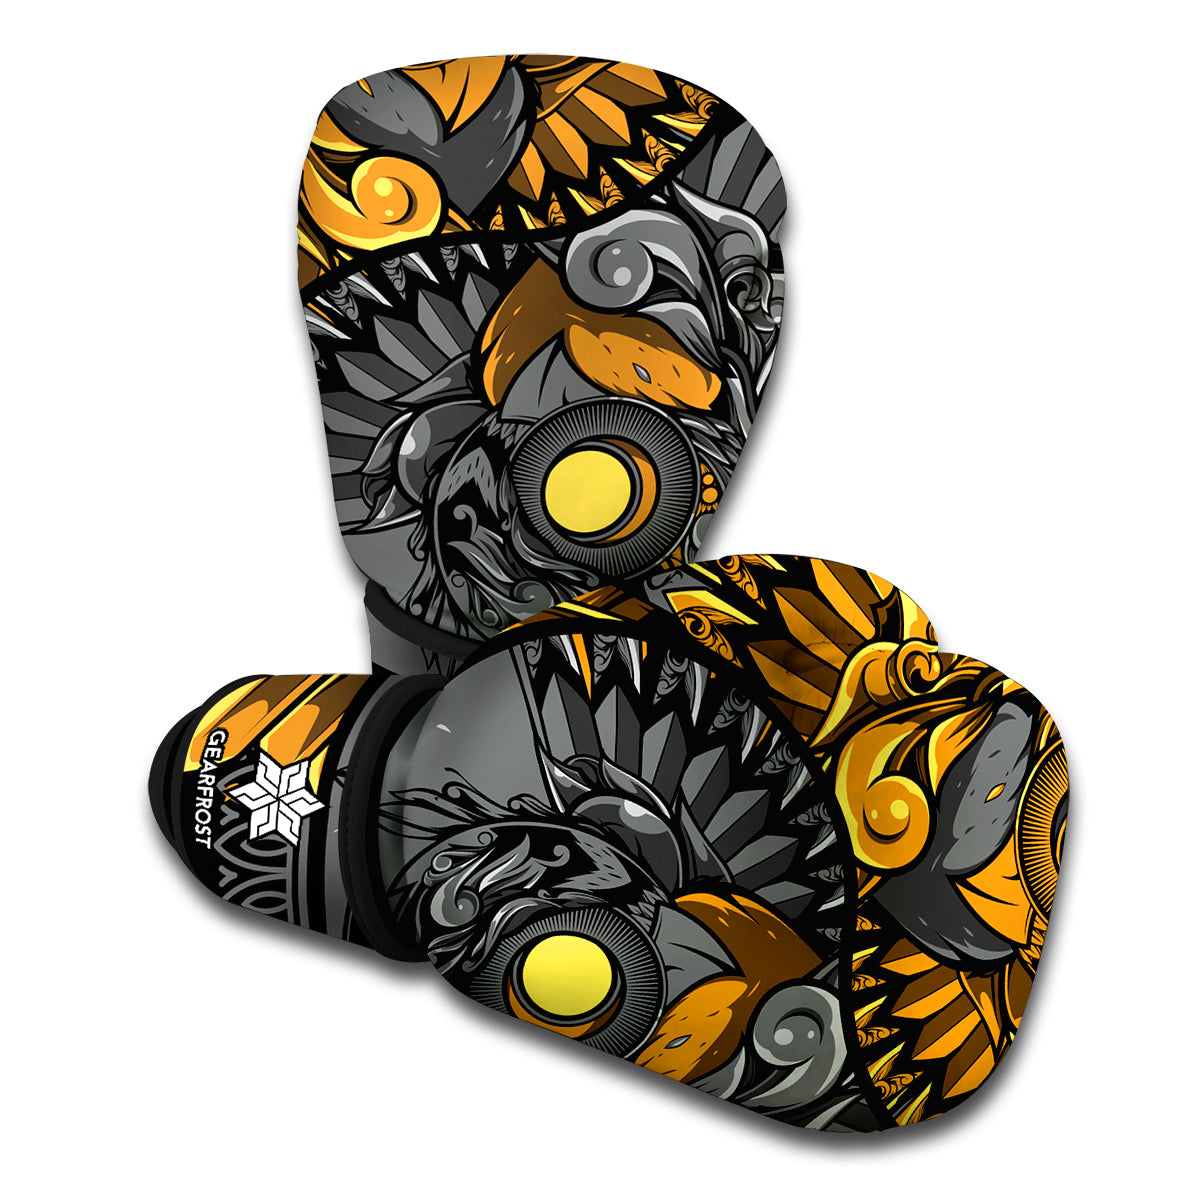 Yin Yang Owl Print Boxing Gloves